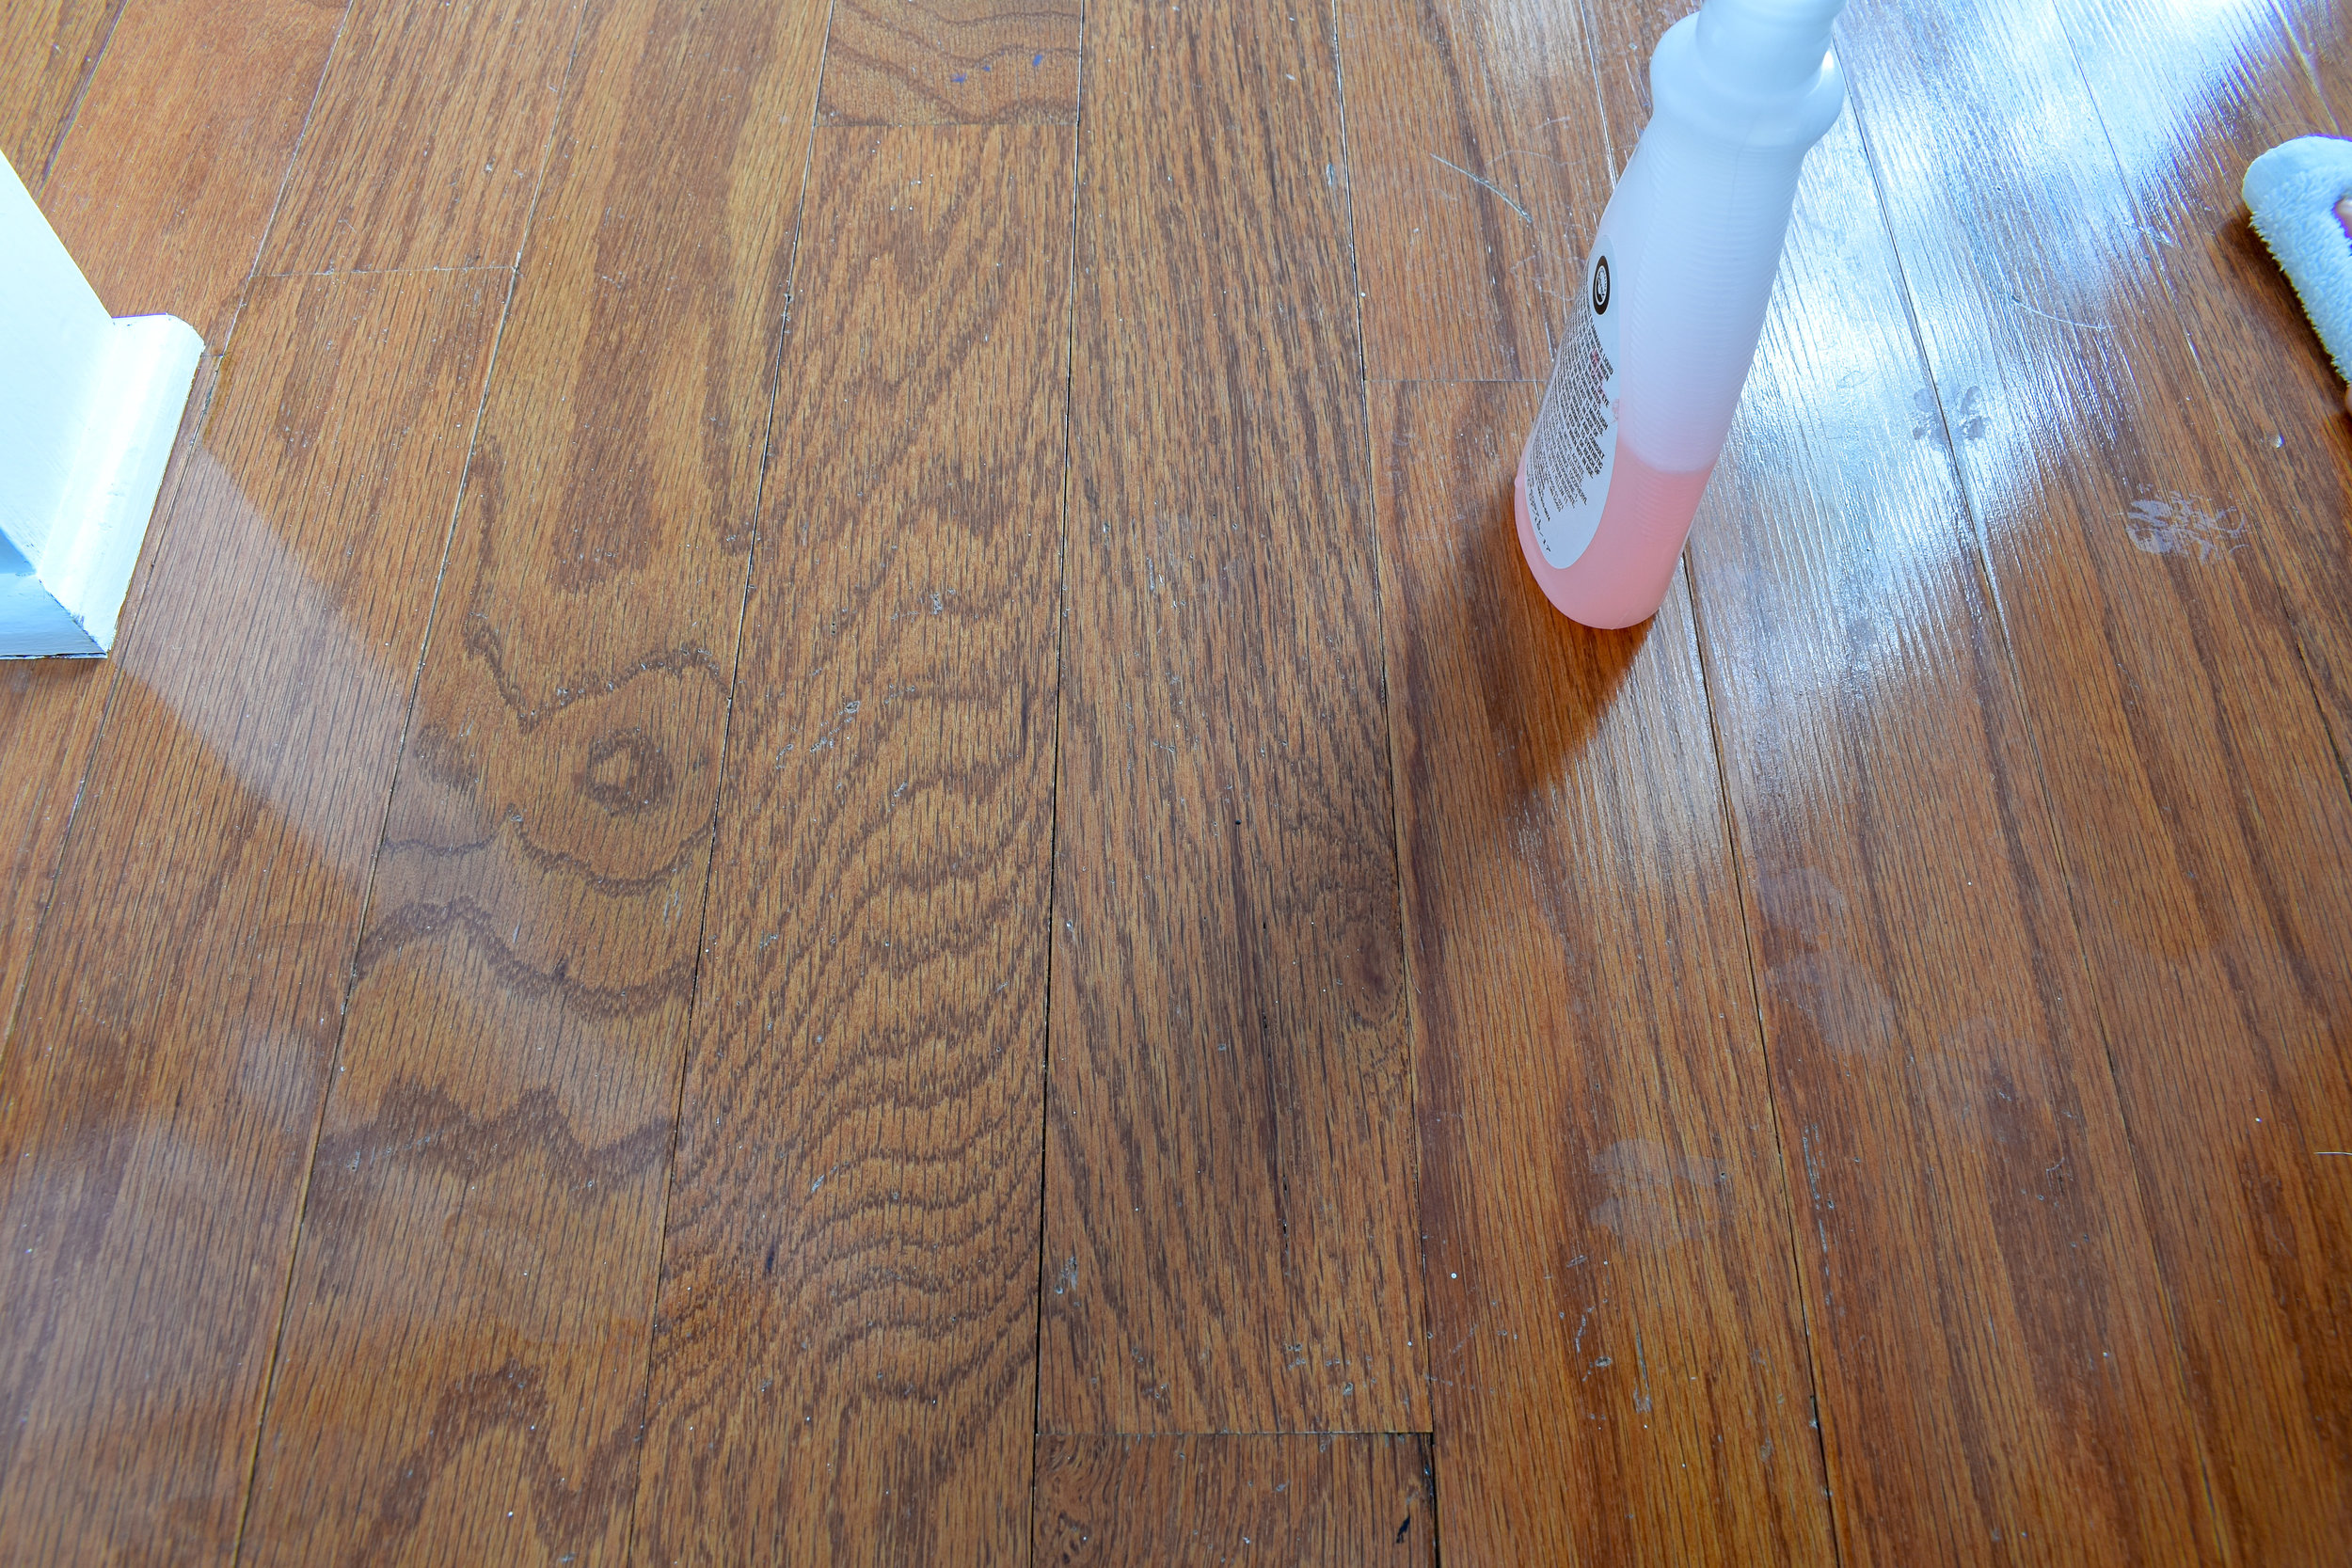 How To Make Old Hardwood Floors Shine, How To Polish Hardwood Floors Yourself